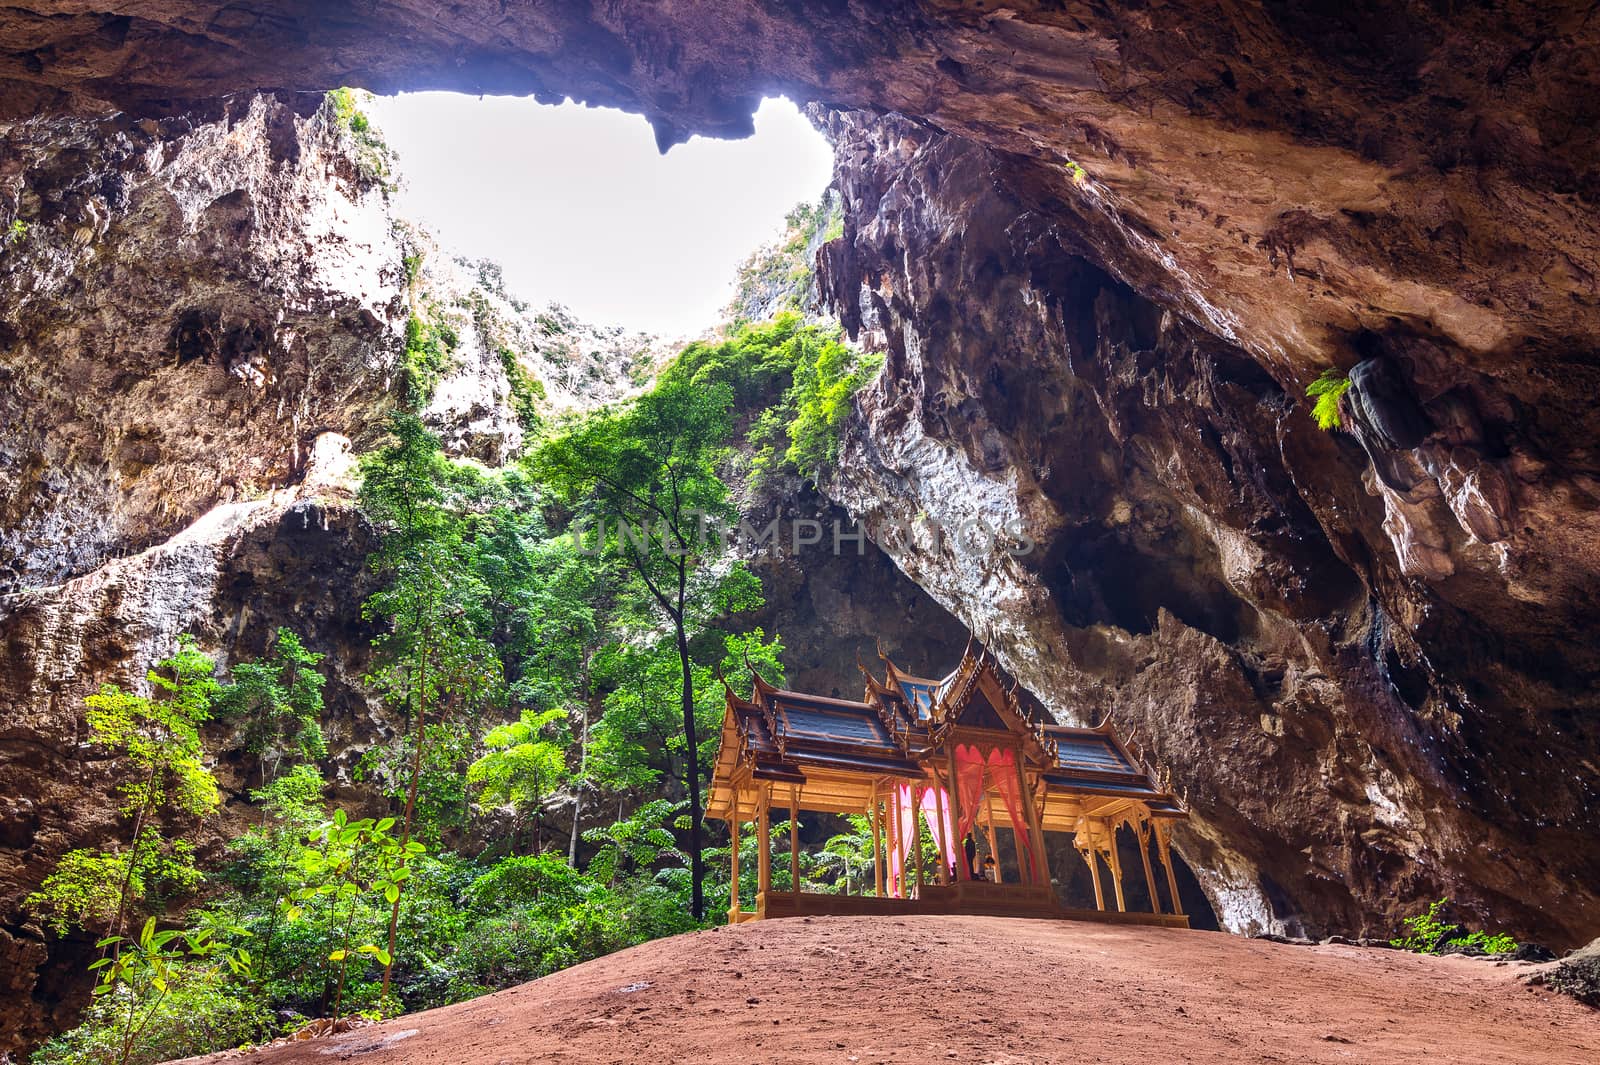 Phrayanakorn Cave in Prachuap Khiri Khan province, Thailand.